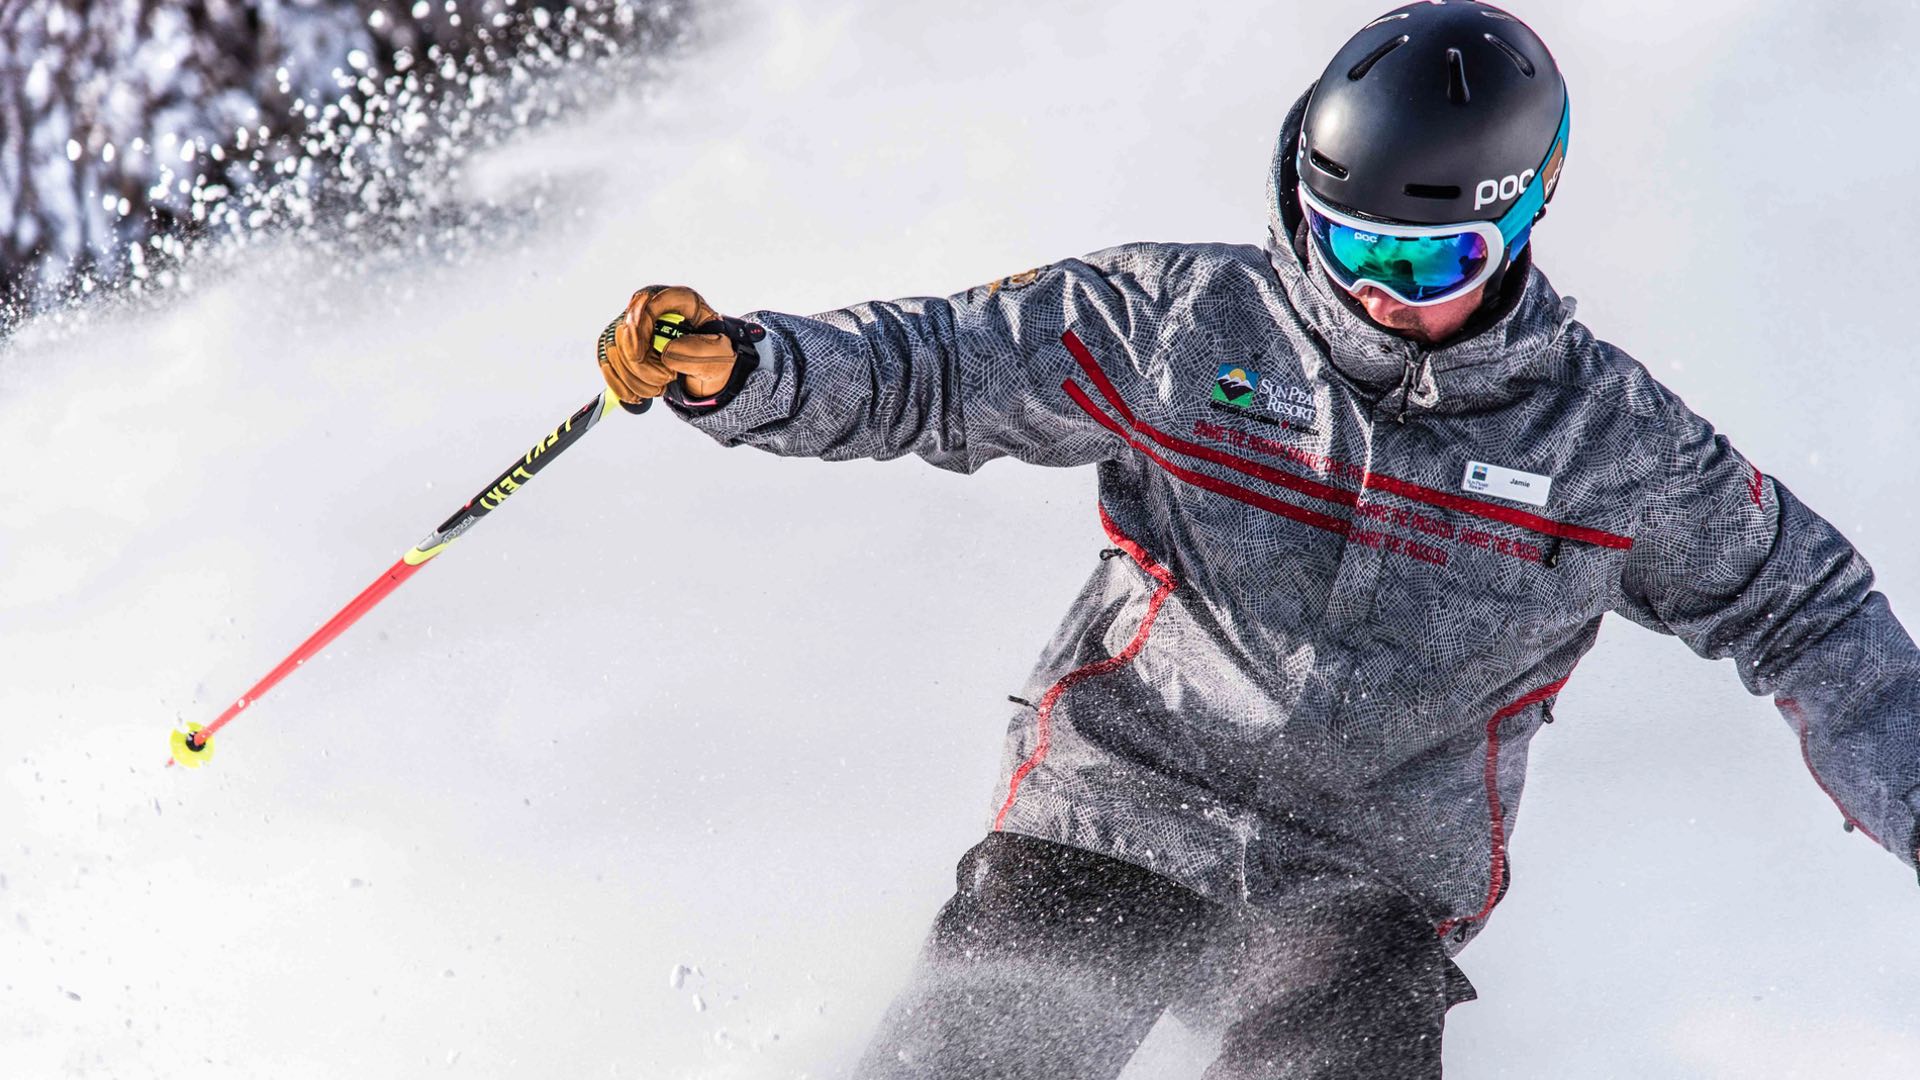 Ski Instructor Arm Out Amid Snow Spray